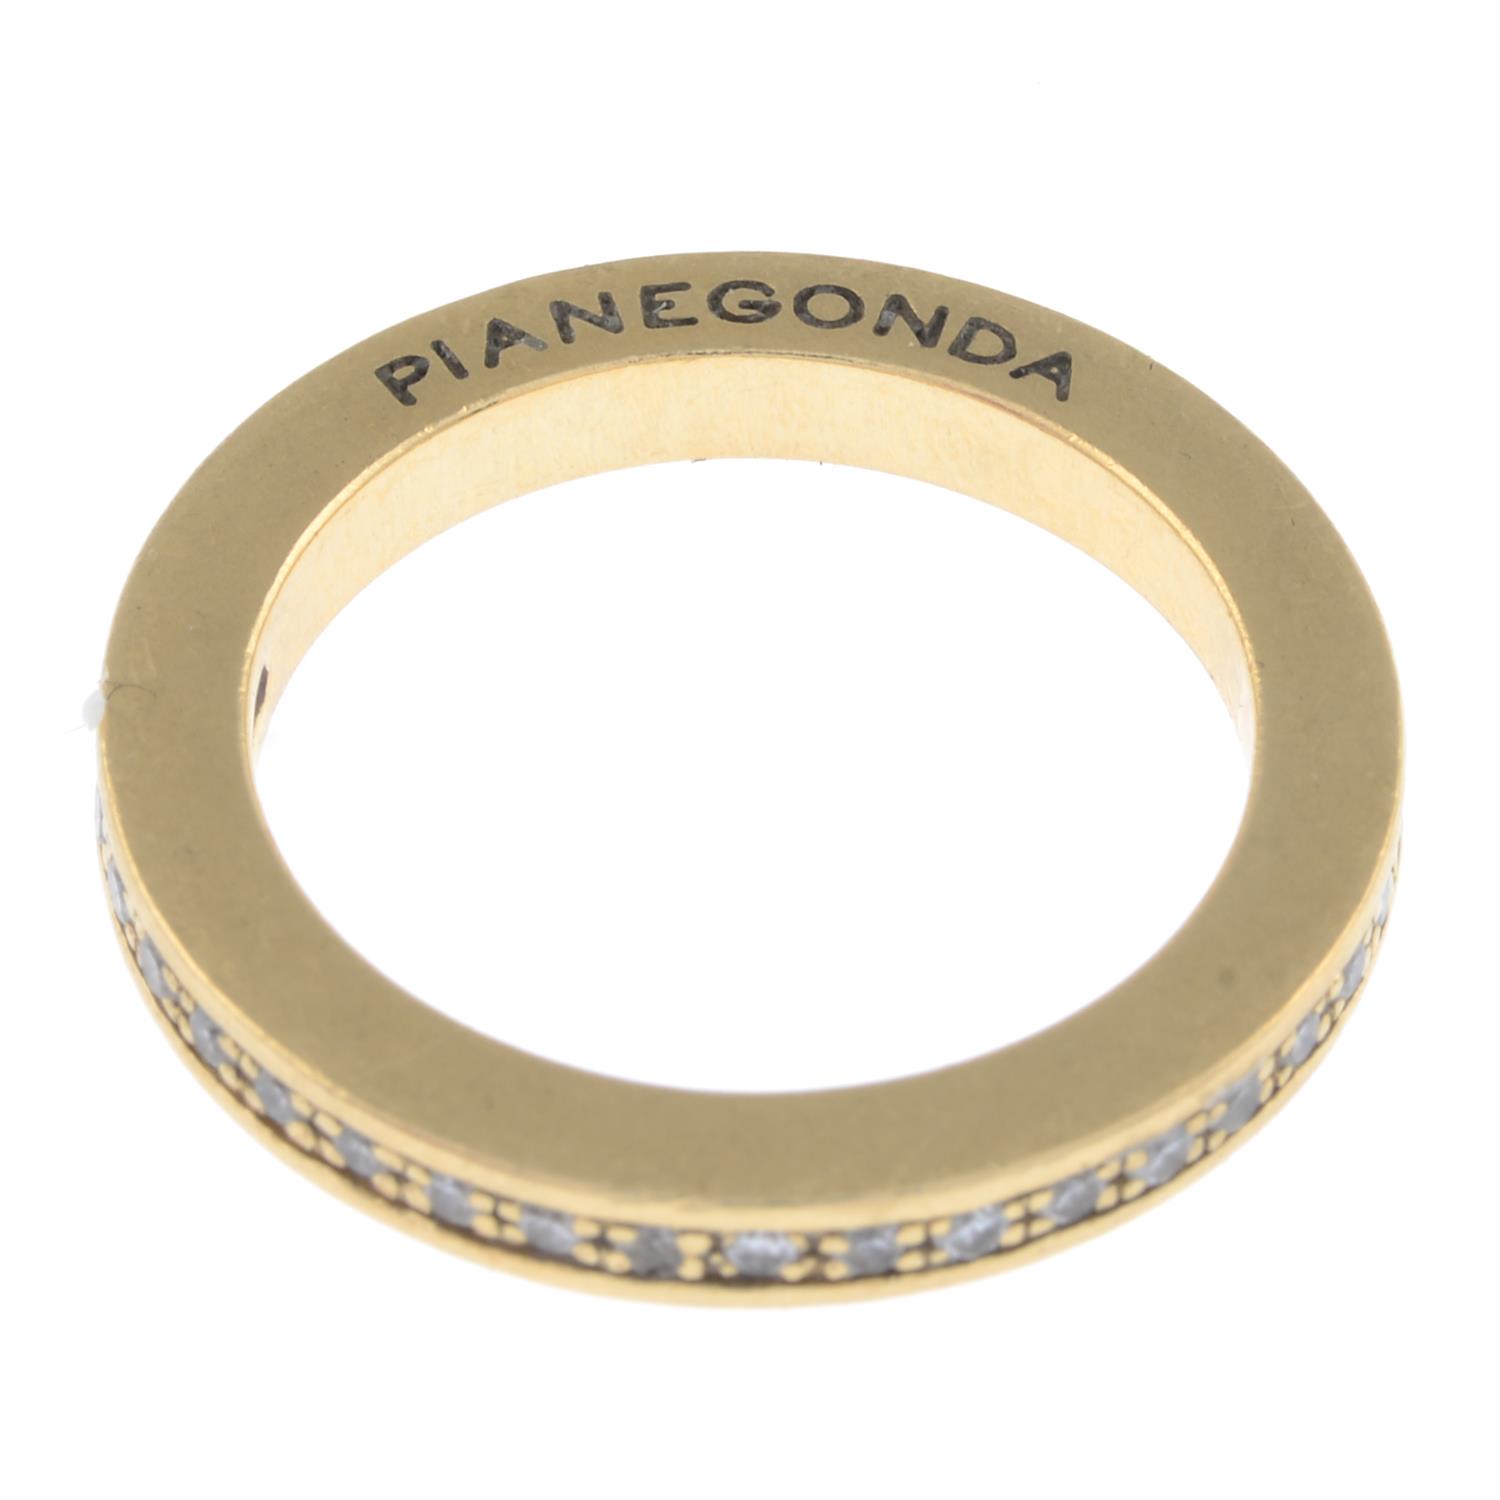 Diamond full eternity ring, by Pianegonda - Image 2 of 2